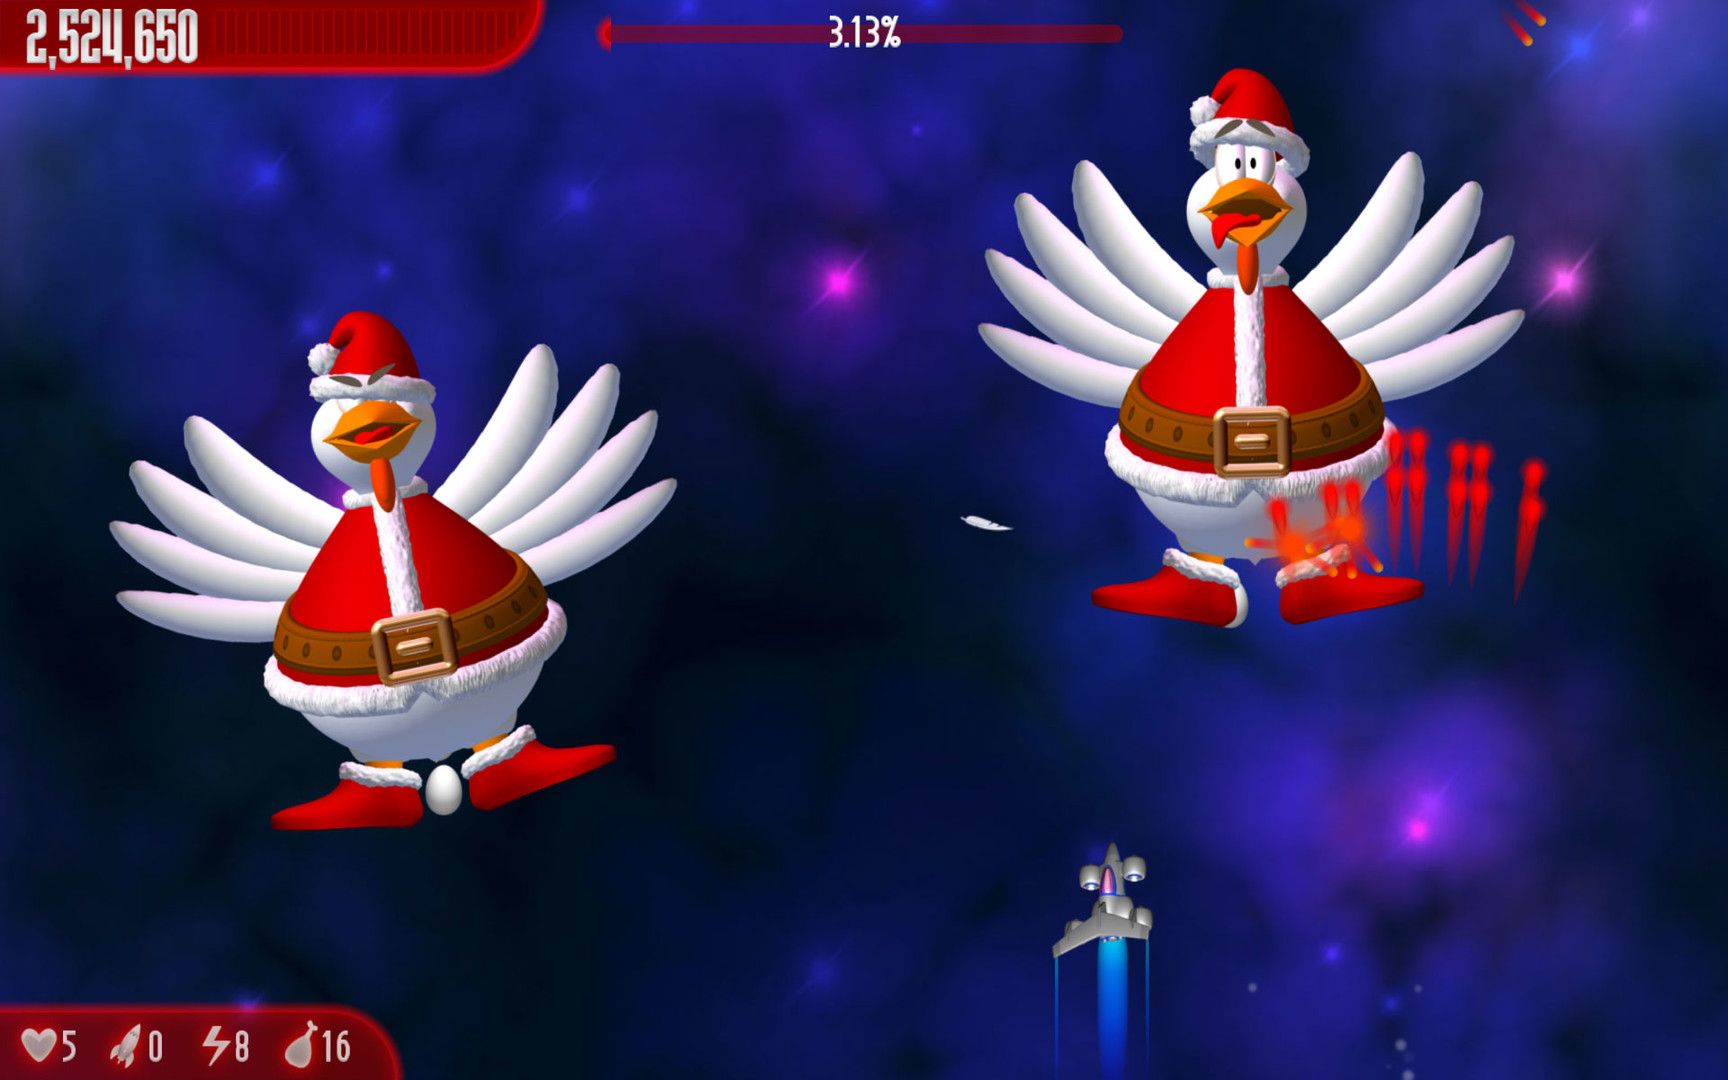 chicken invaders 3 cristmas